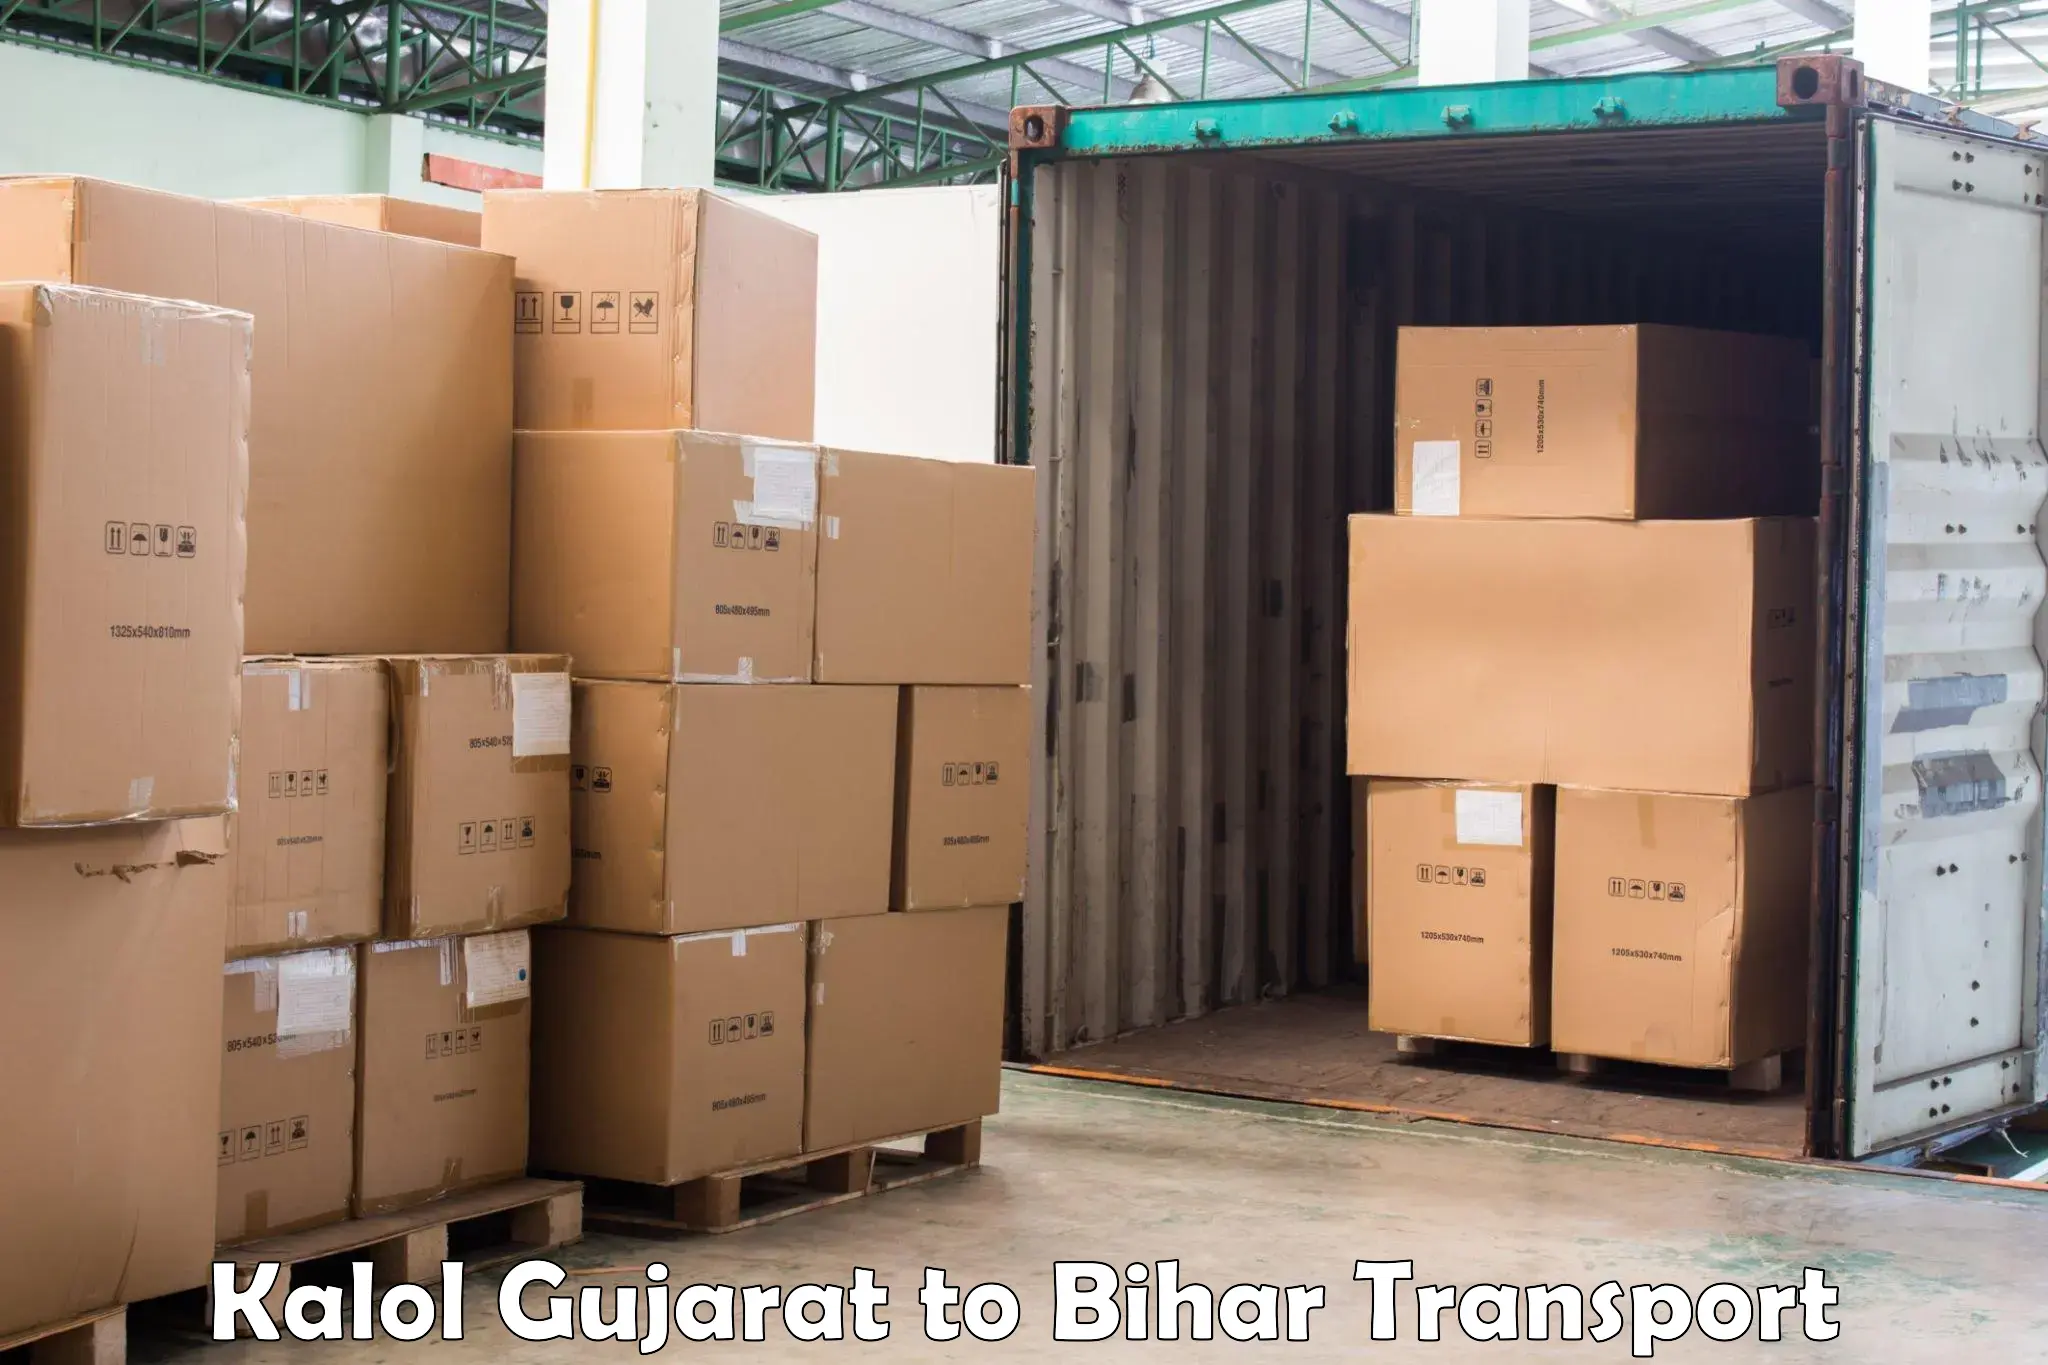 Truck transport companies in India Kalol Gujarat to Arrah